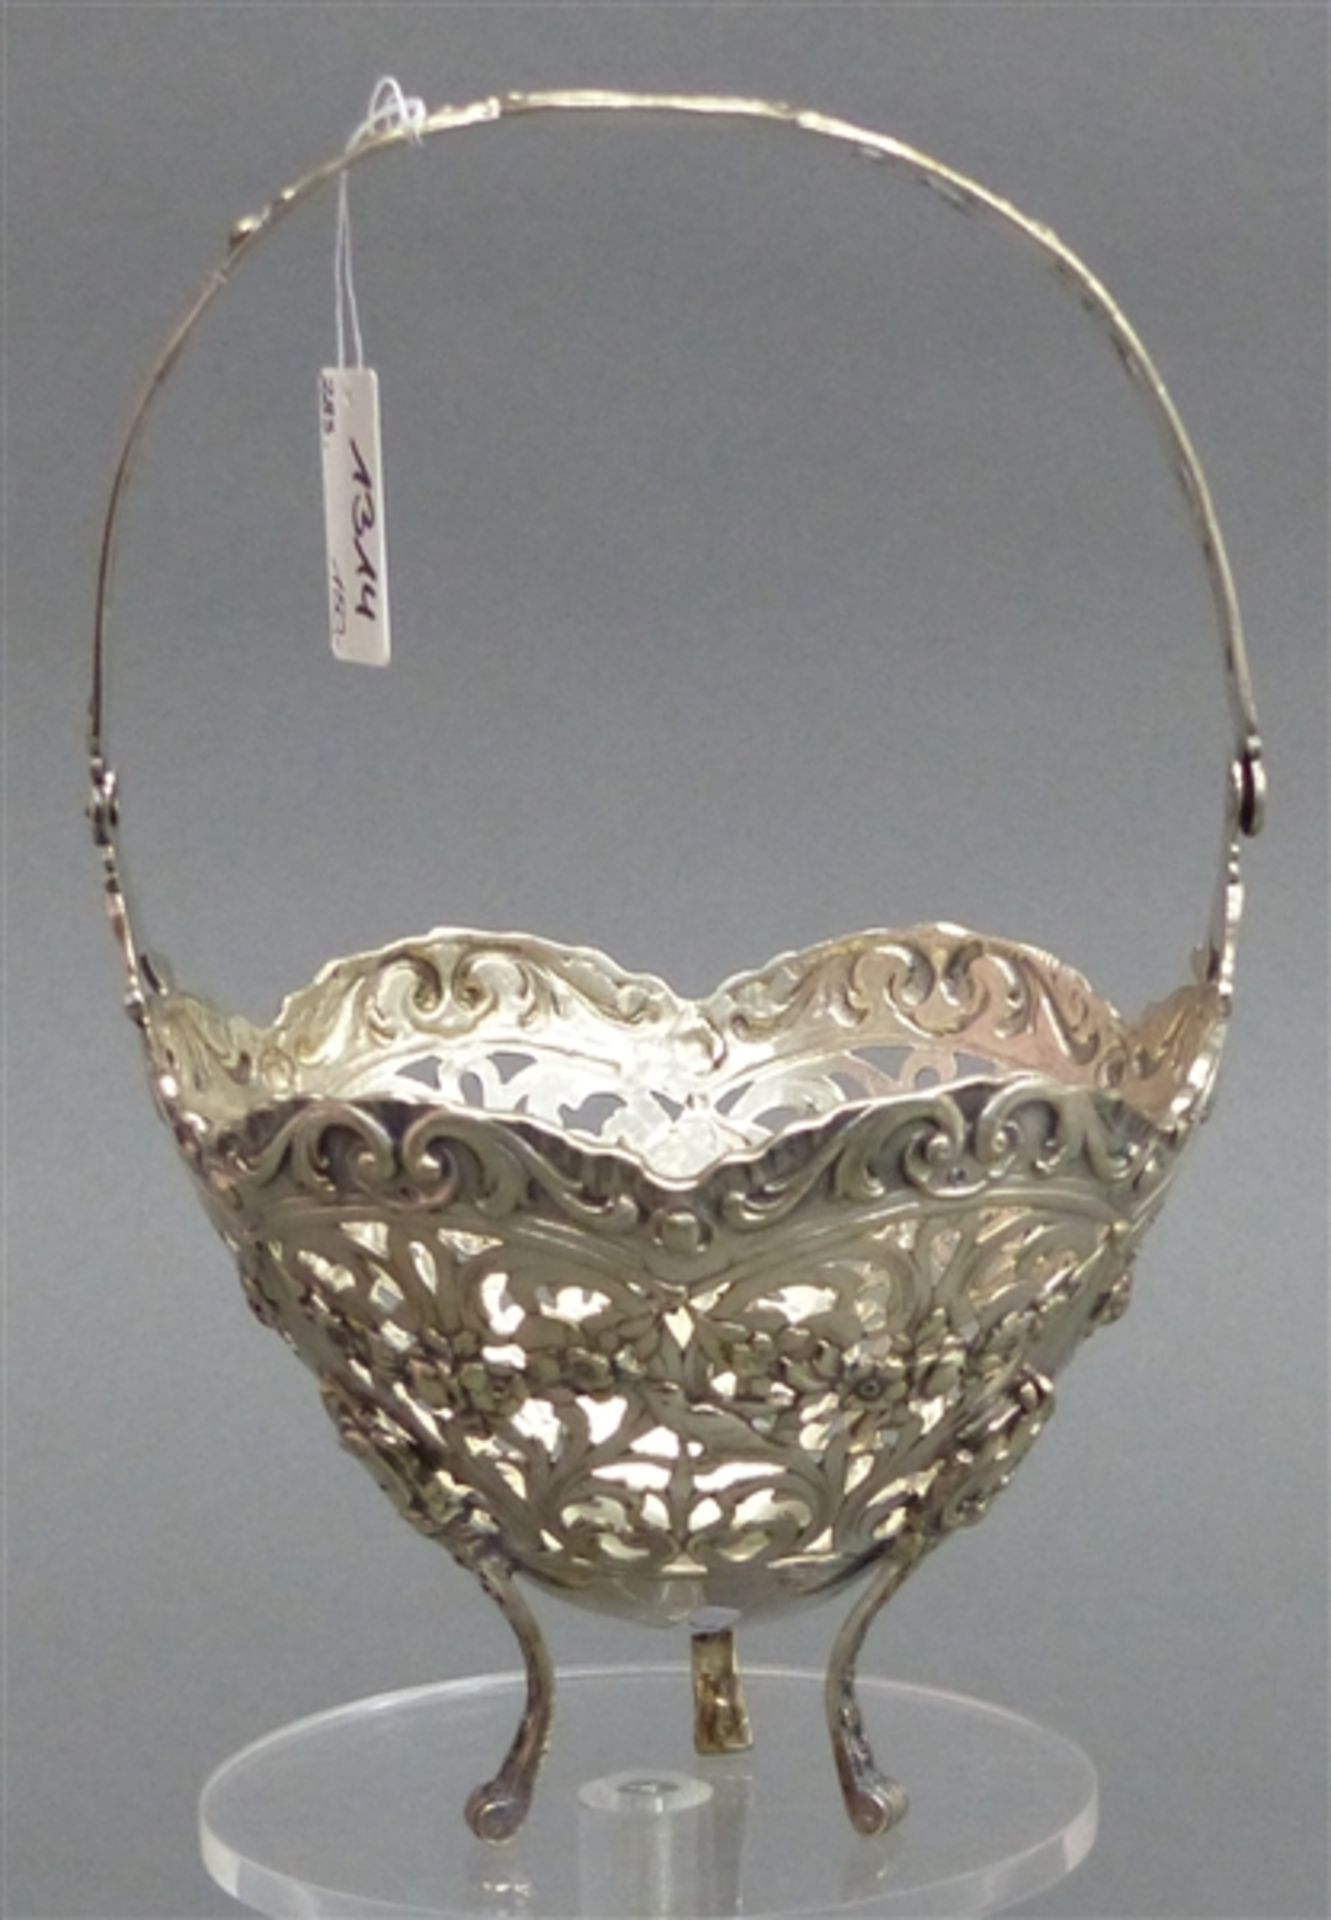 Henkelkorb Silber, Standfüßchen, durchbrochen, reliefierter floraler Dekor, 20. Jh., h 20 cm,